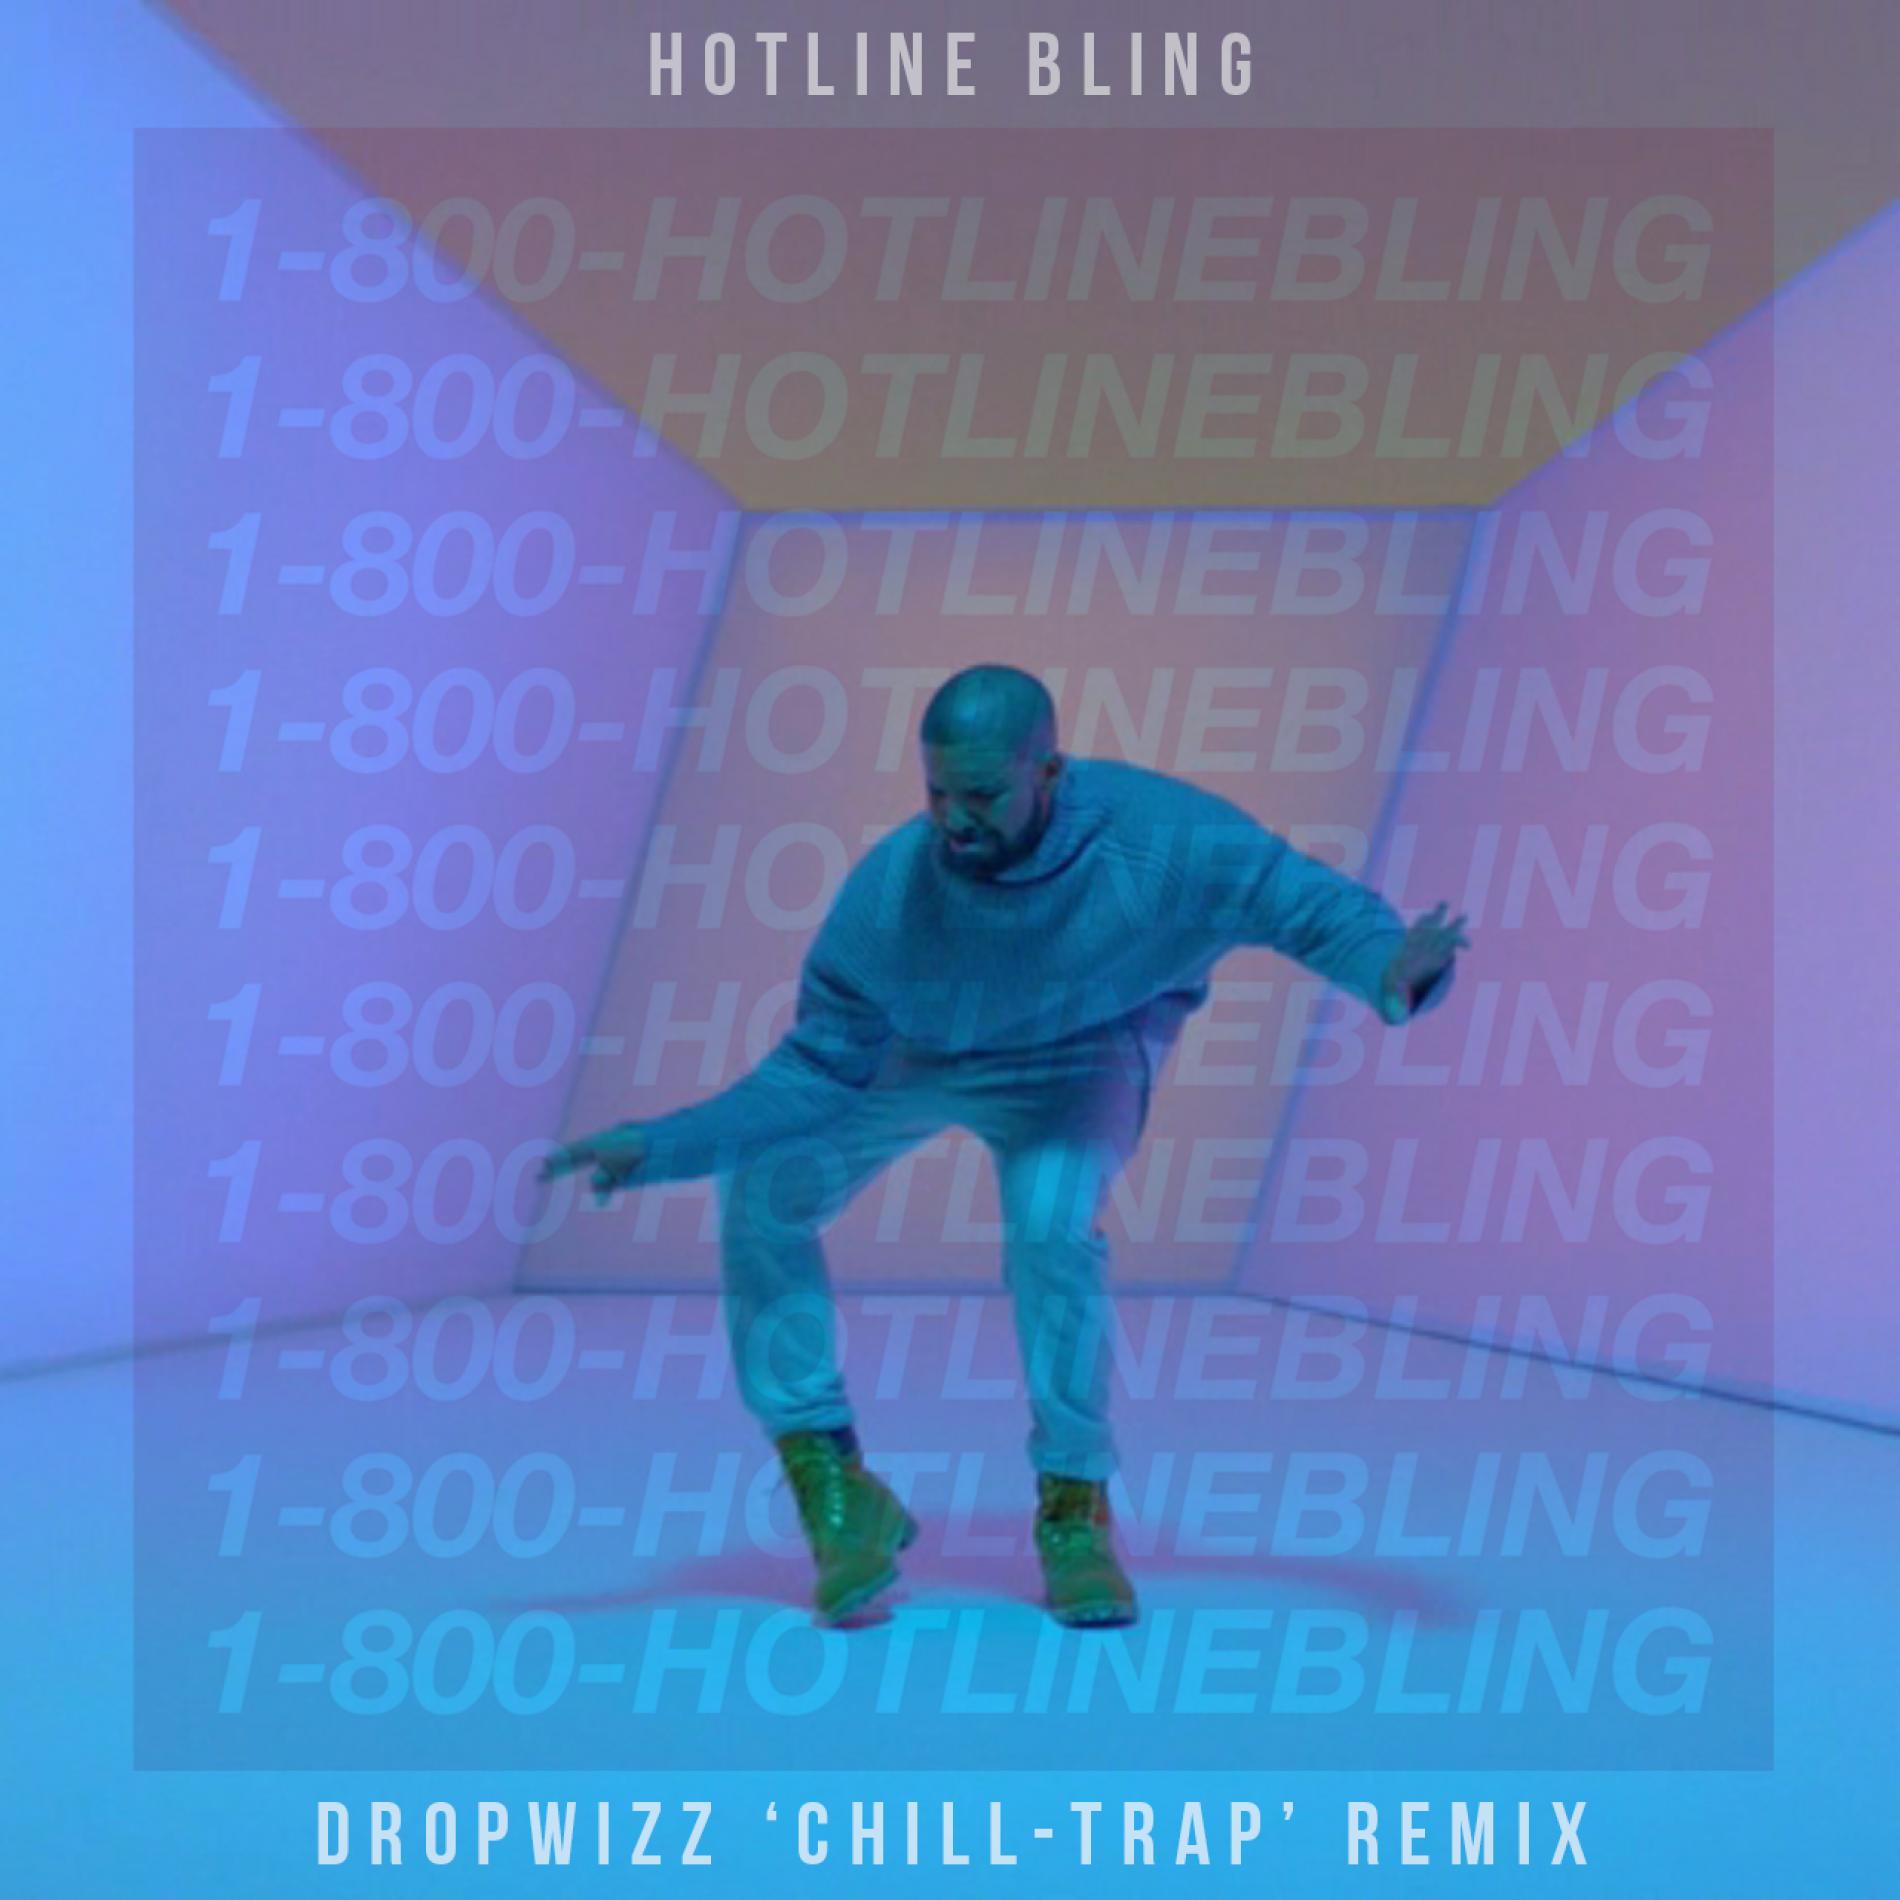 Dropwizz – Hotline Bling (‘Chillout Trap’ Remix)